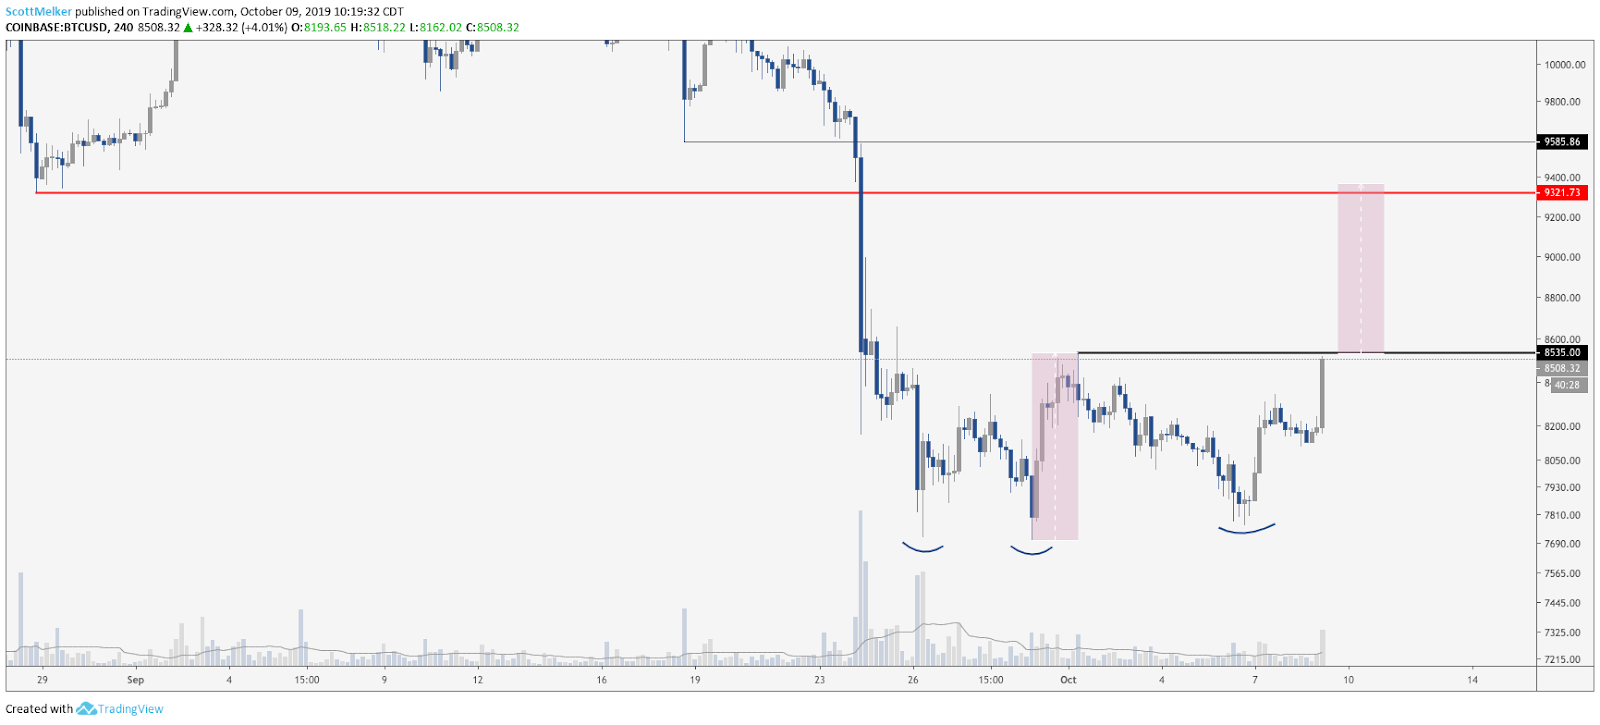 BTC/USD 4 hour chart